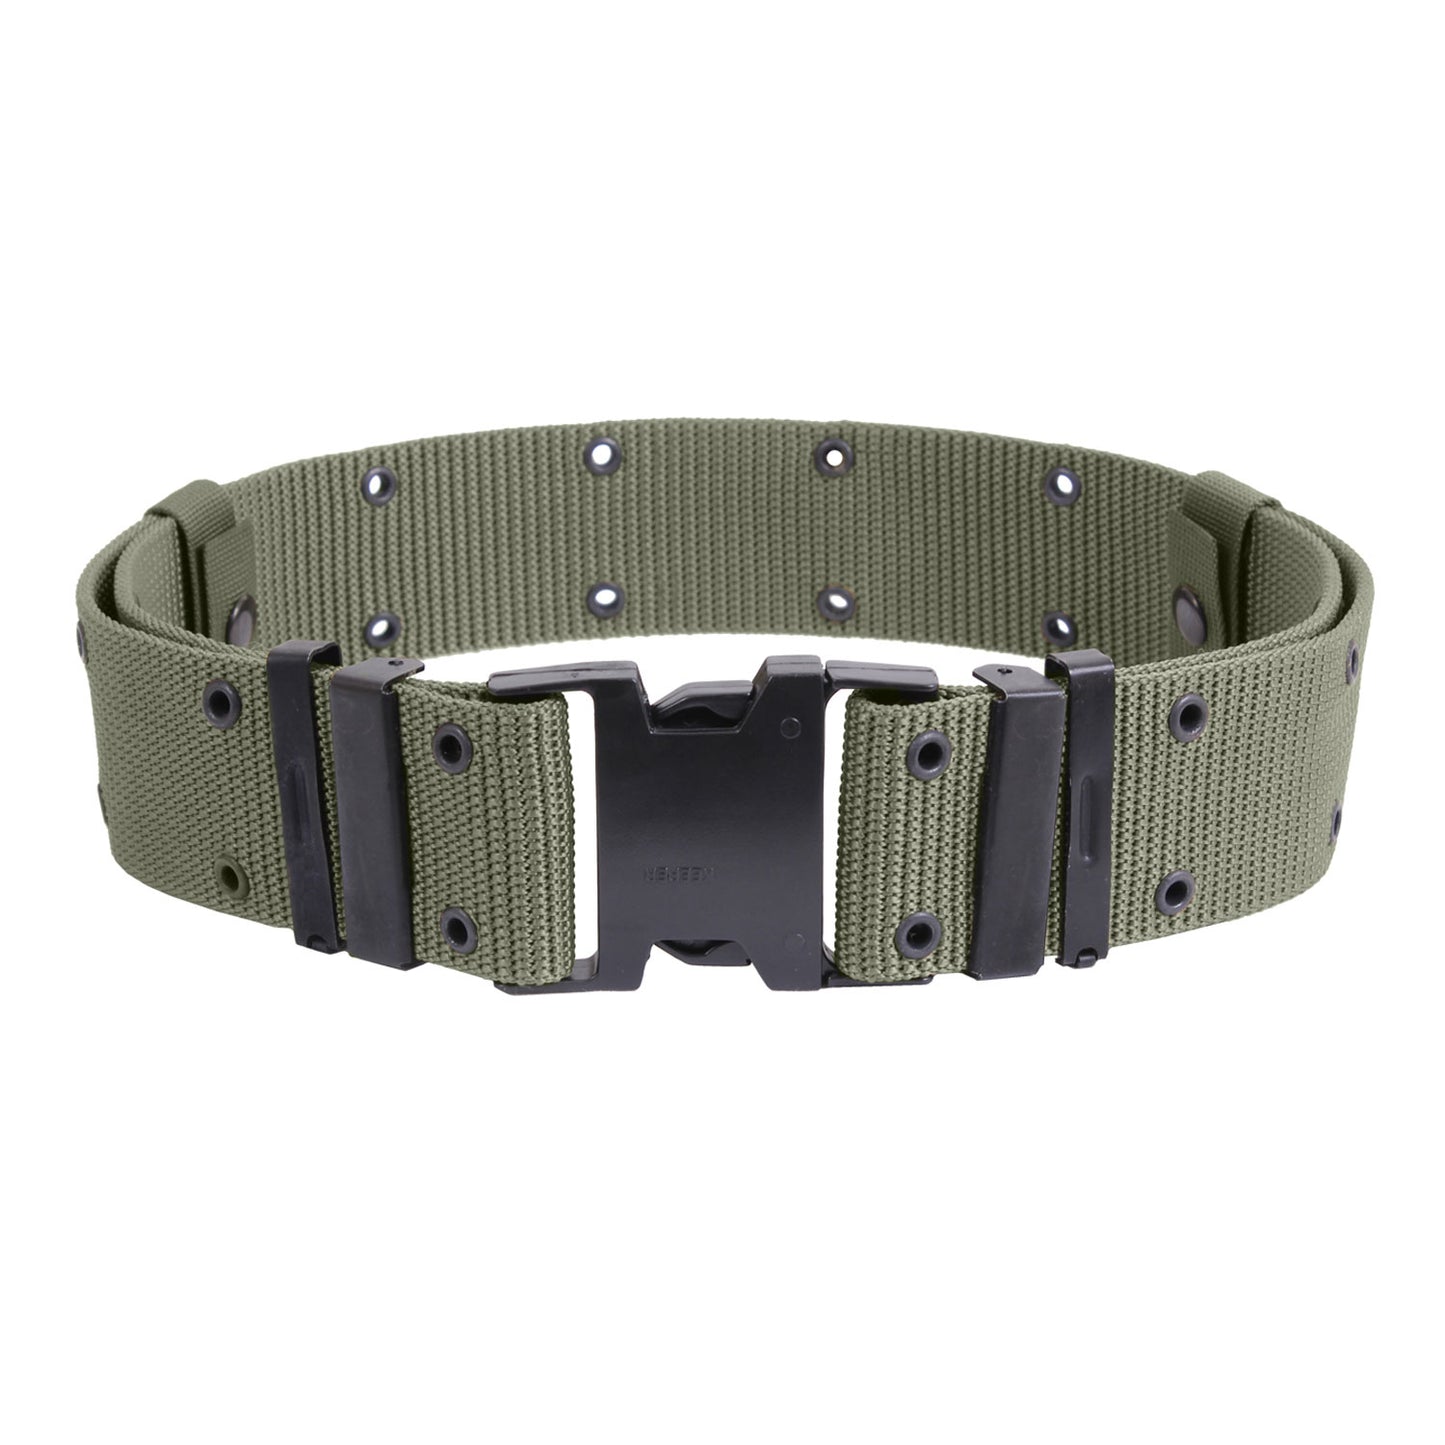 Marine Corps Style Nylon Quick Release Belt